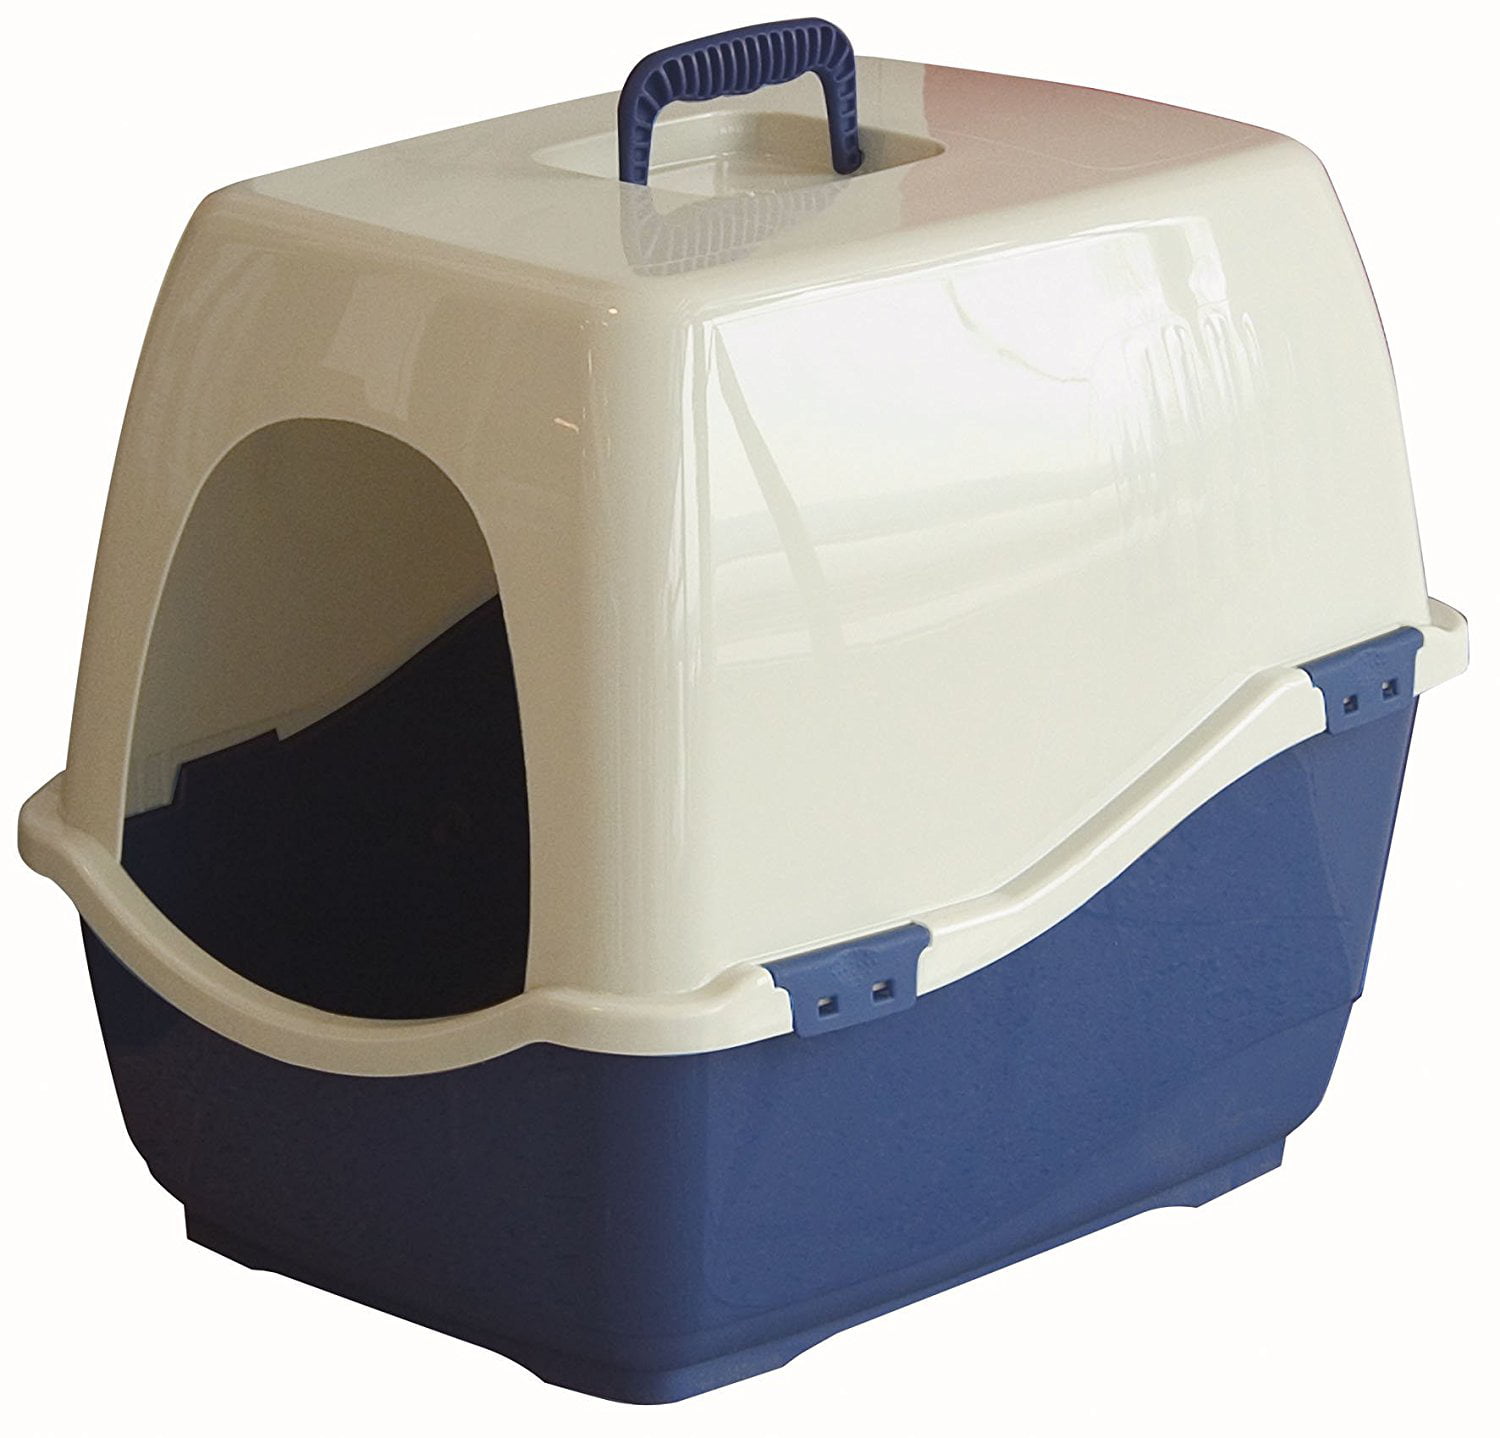 Bill 1S Covered Cat Litter Pan, Small/Medium, Tan/Blue, Detachable hood